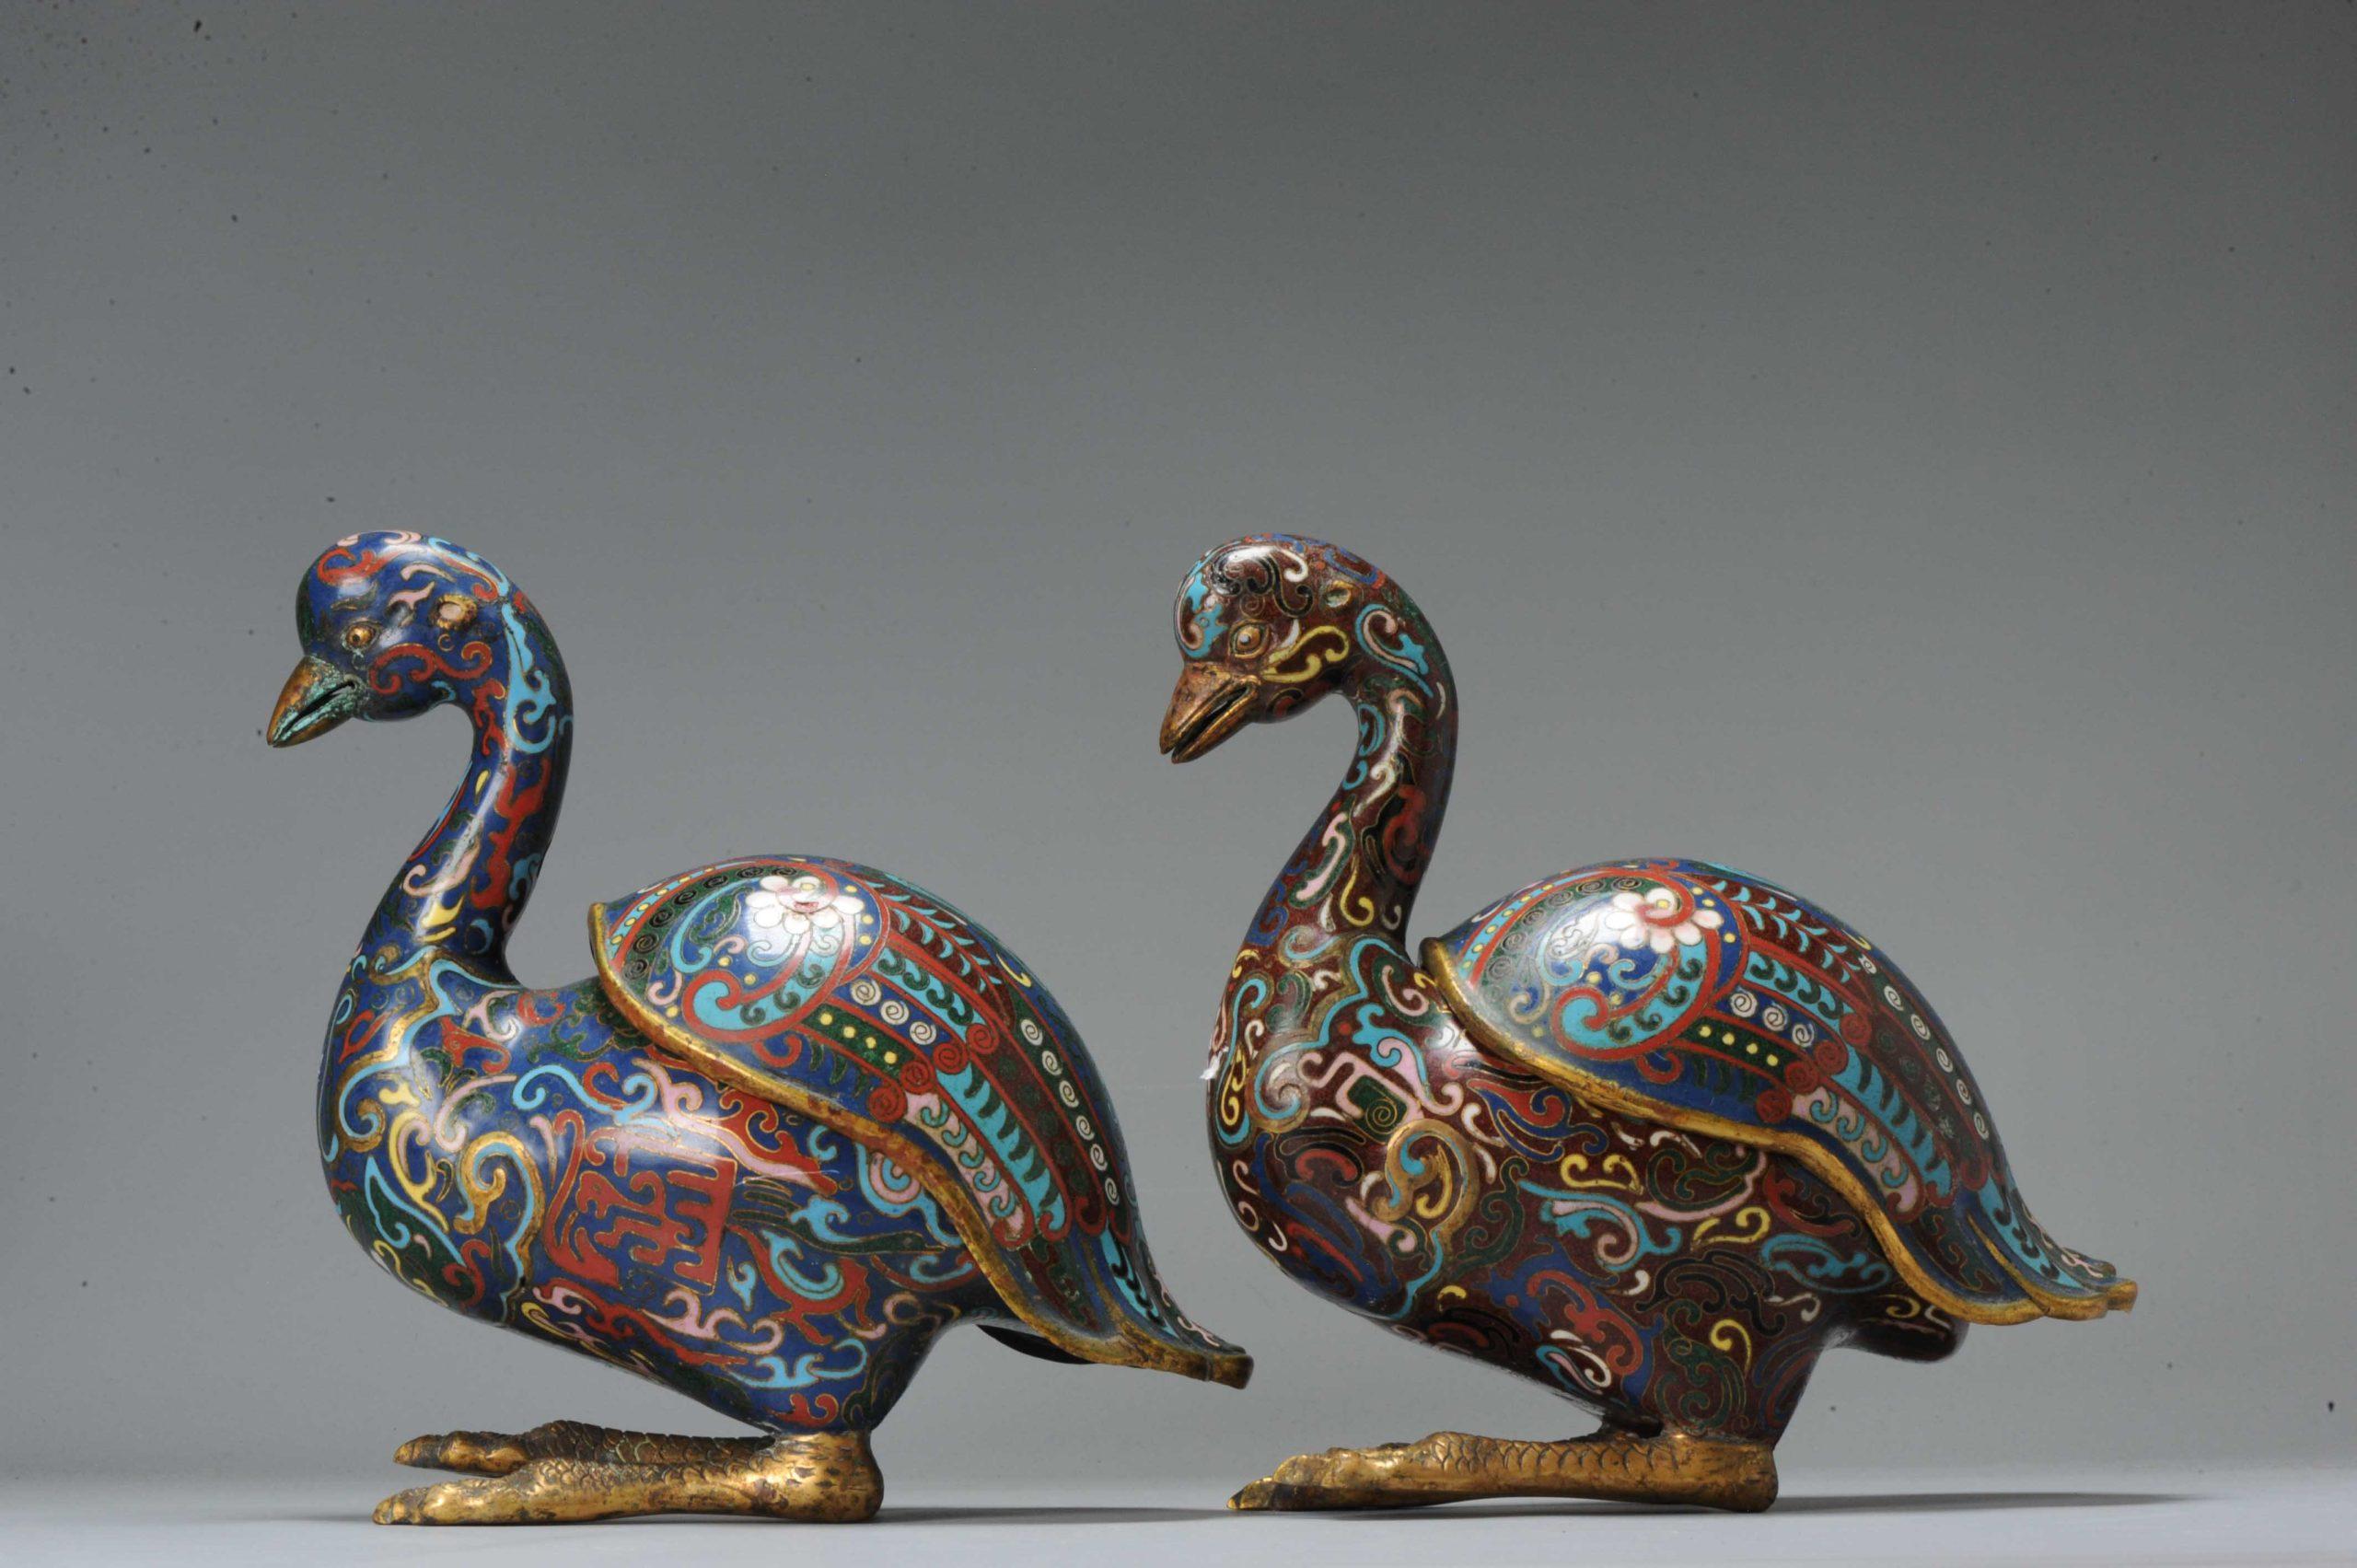 Antique Bronze / Copper Cloisonné Burner Inscense Koro Geese or Swan For Sale 3